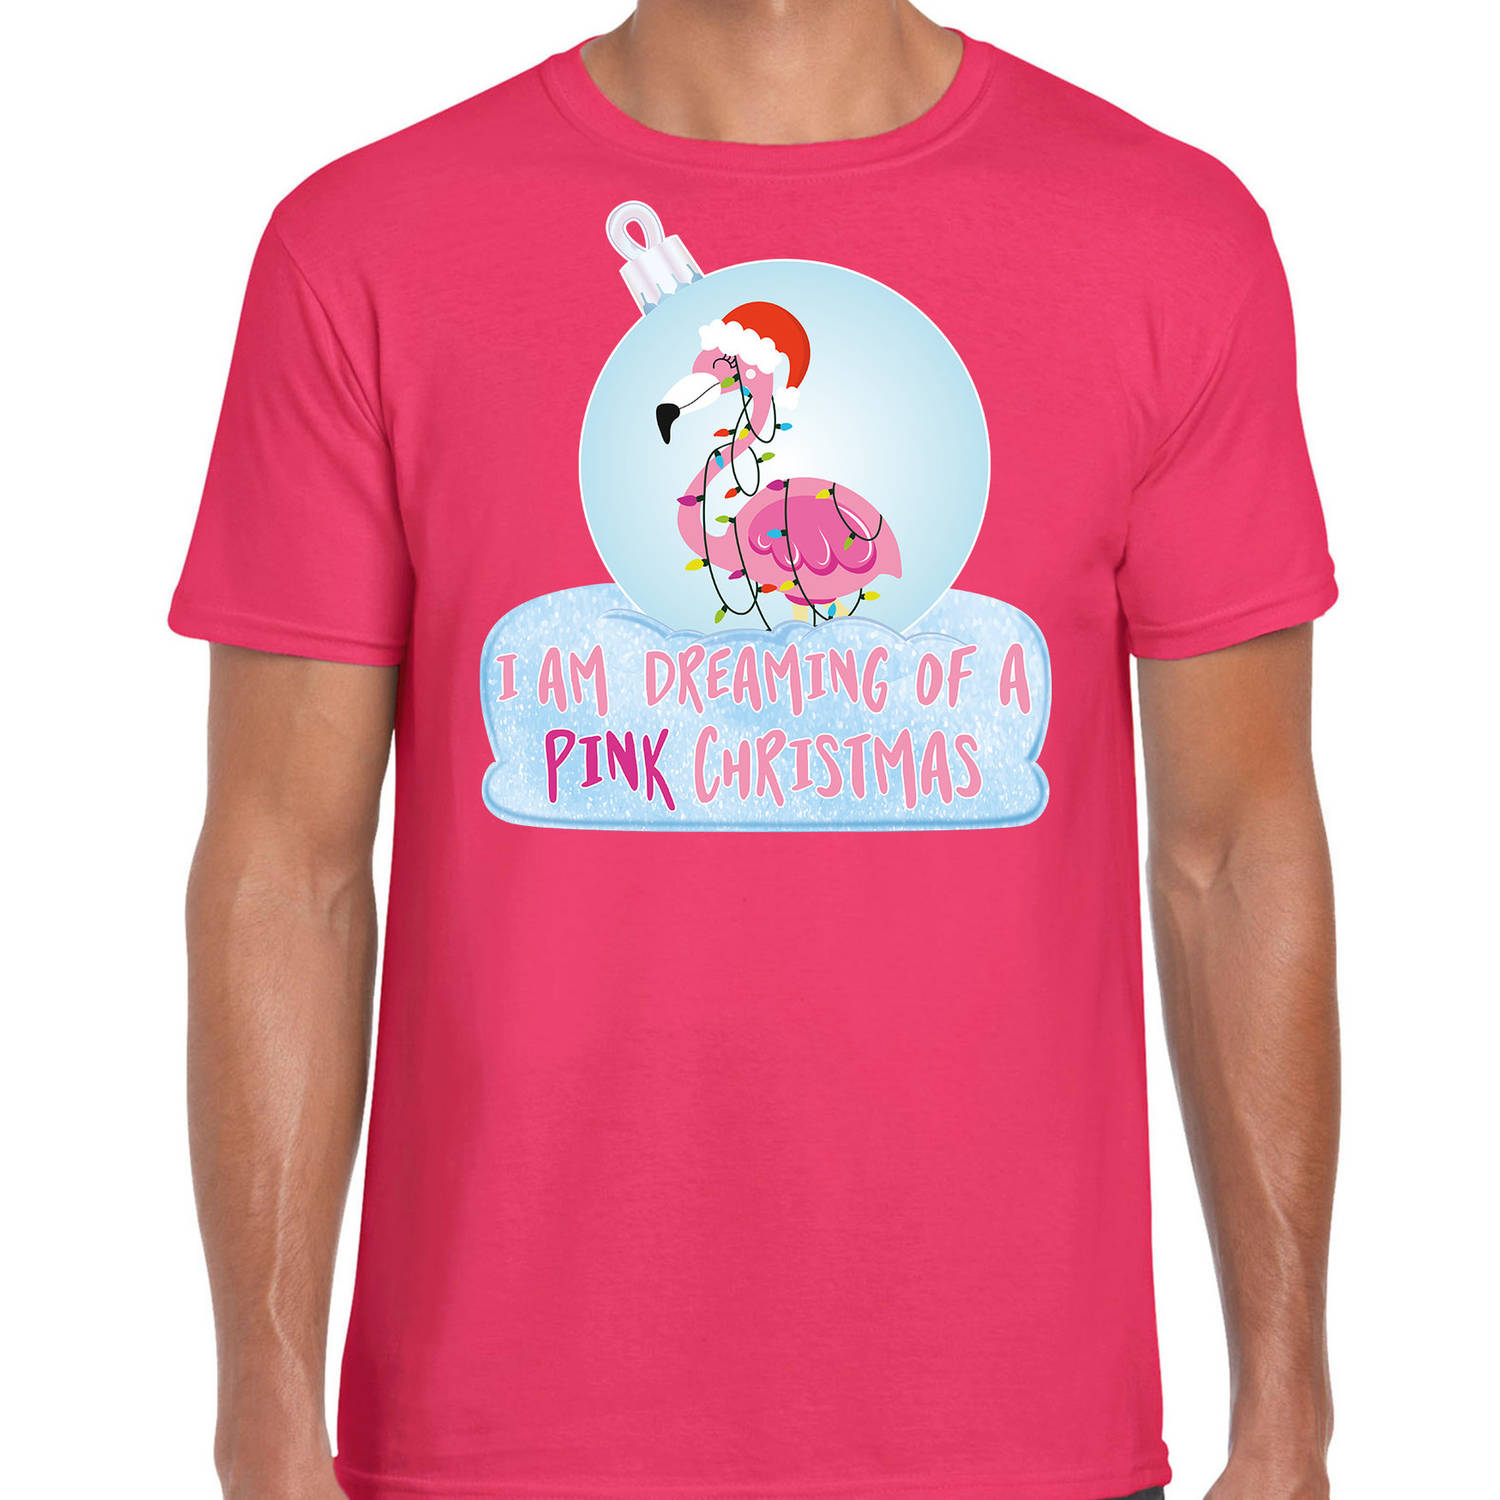 Roze Kerstshirt / Kerstkleding I am dreaming of a pink Christmas voor heren met flamingo kerstbal 2XL - kerst t-shirts